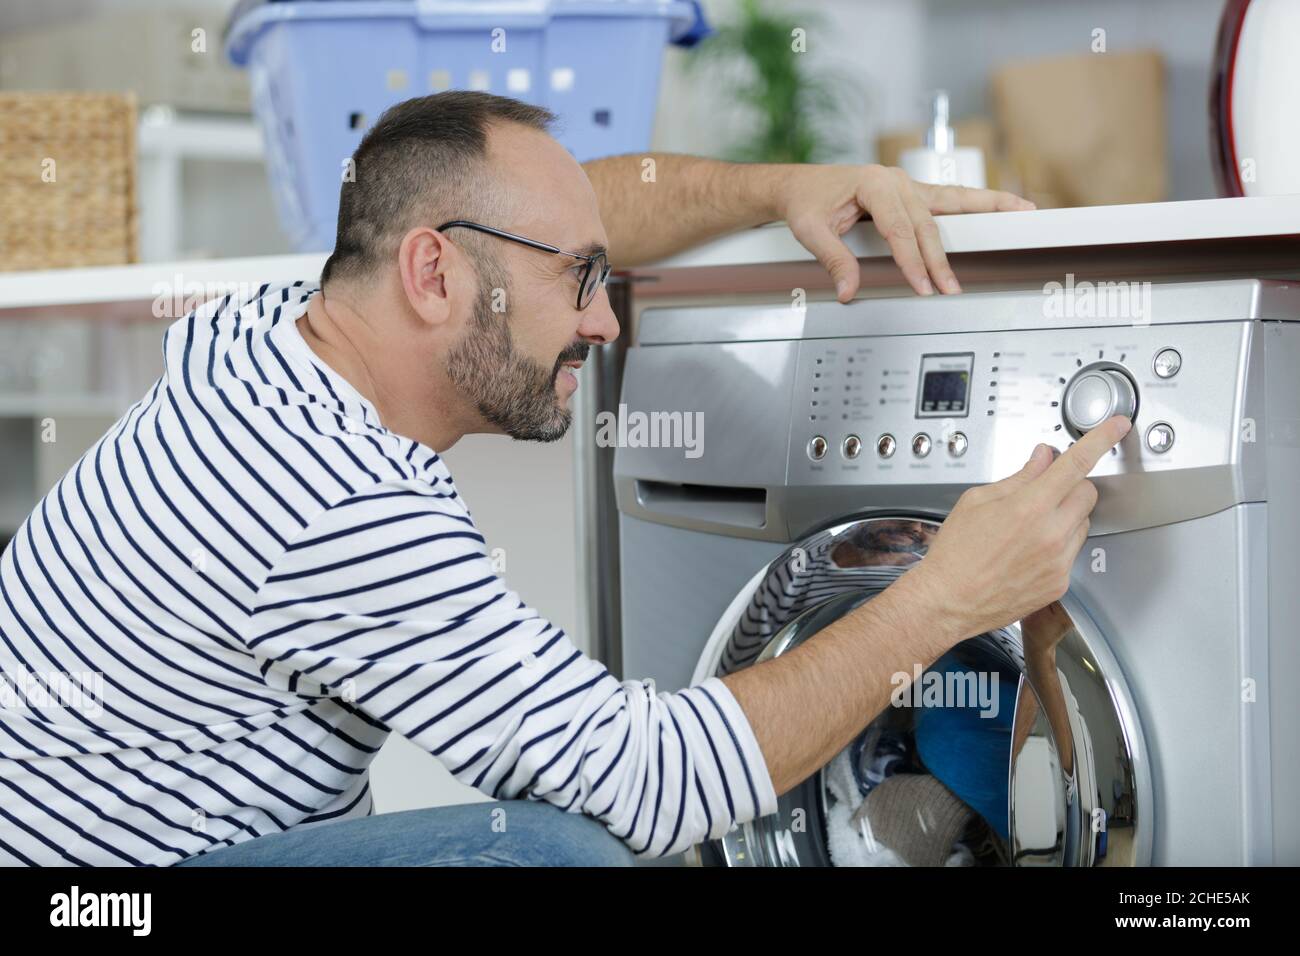 a middle aged man using washing machine Stock Photo